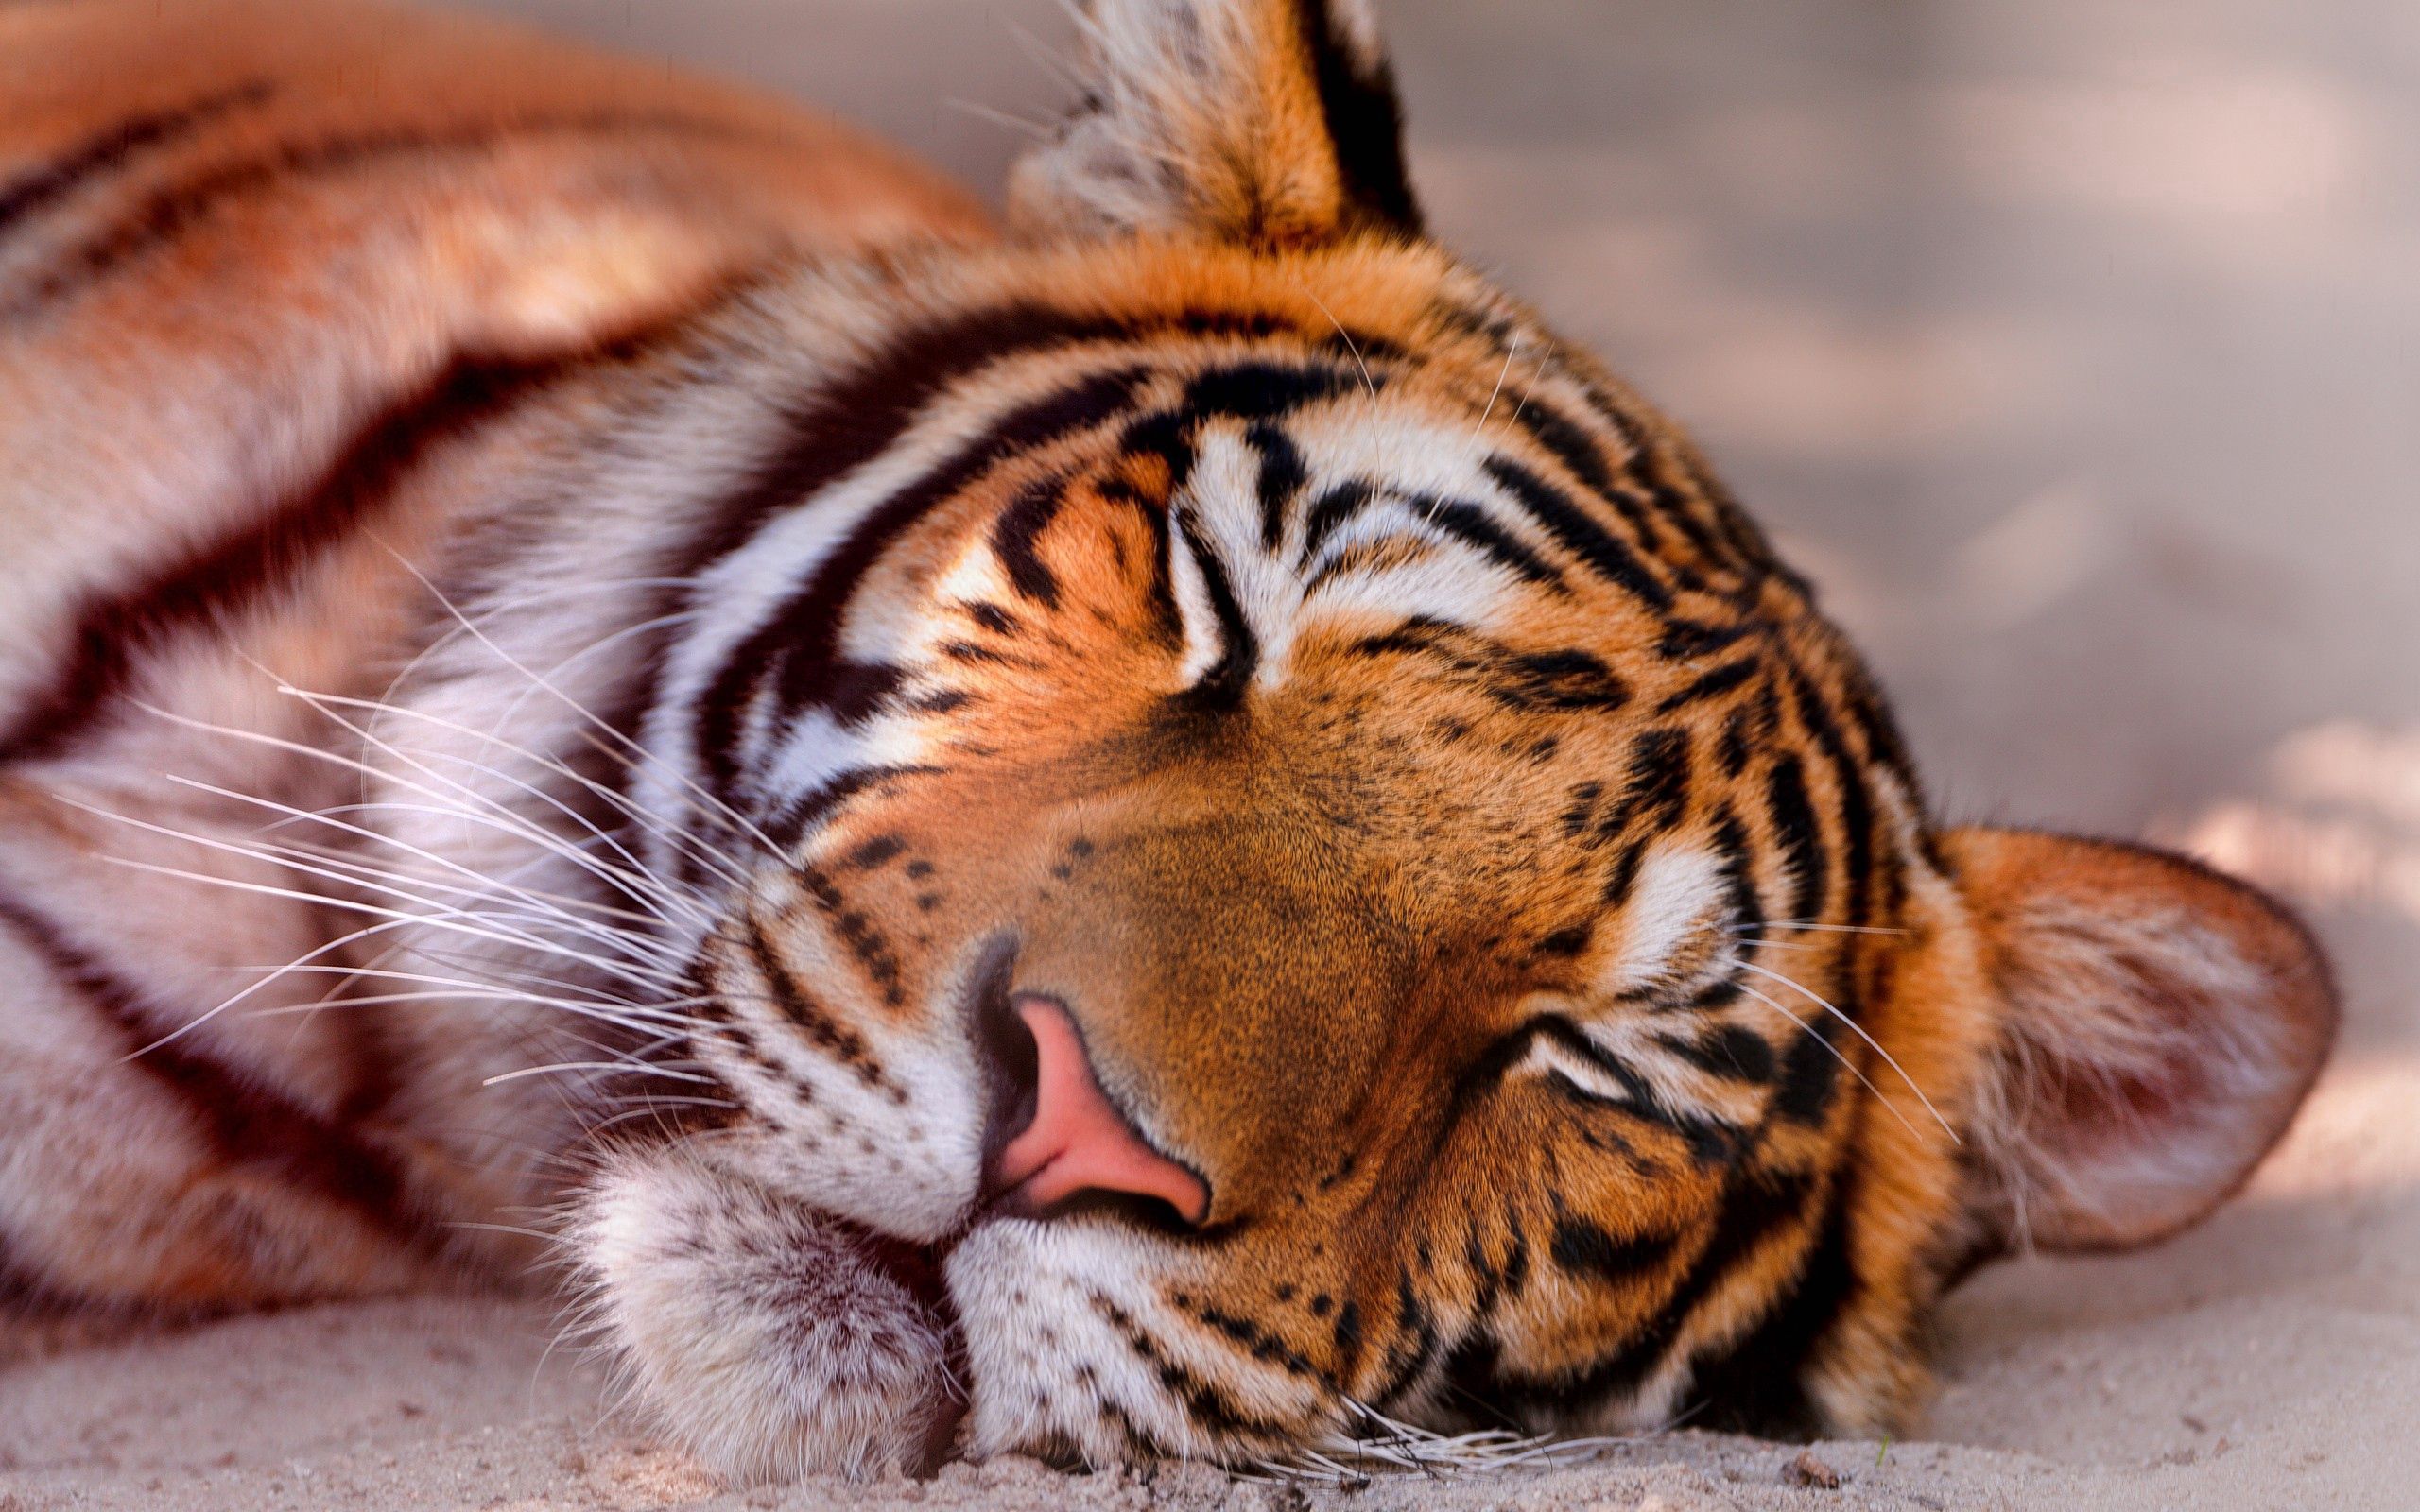 Download wallpaper 2560x1600 tiger, face, sleeping, close up HD